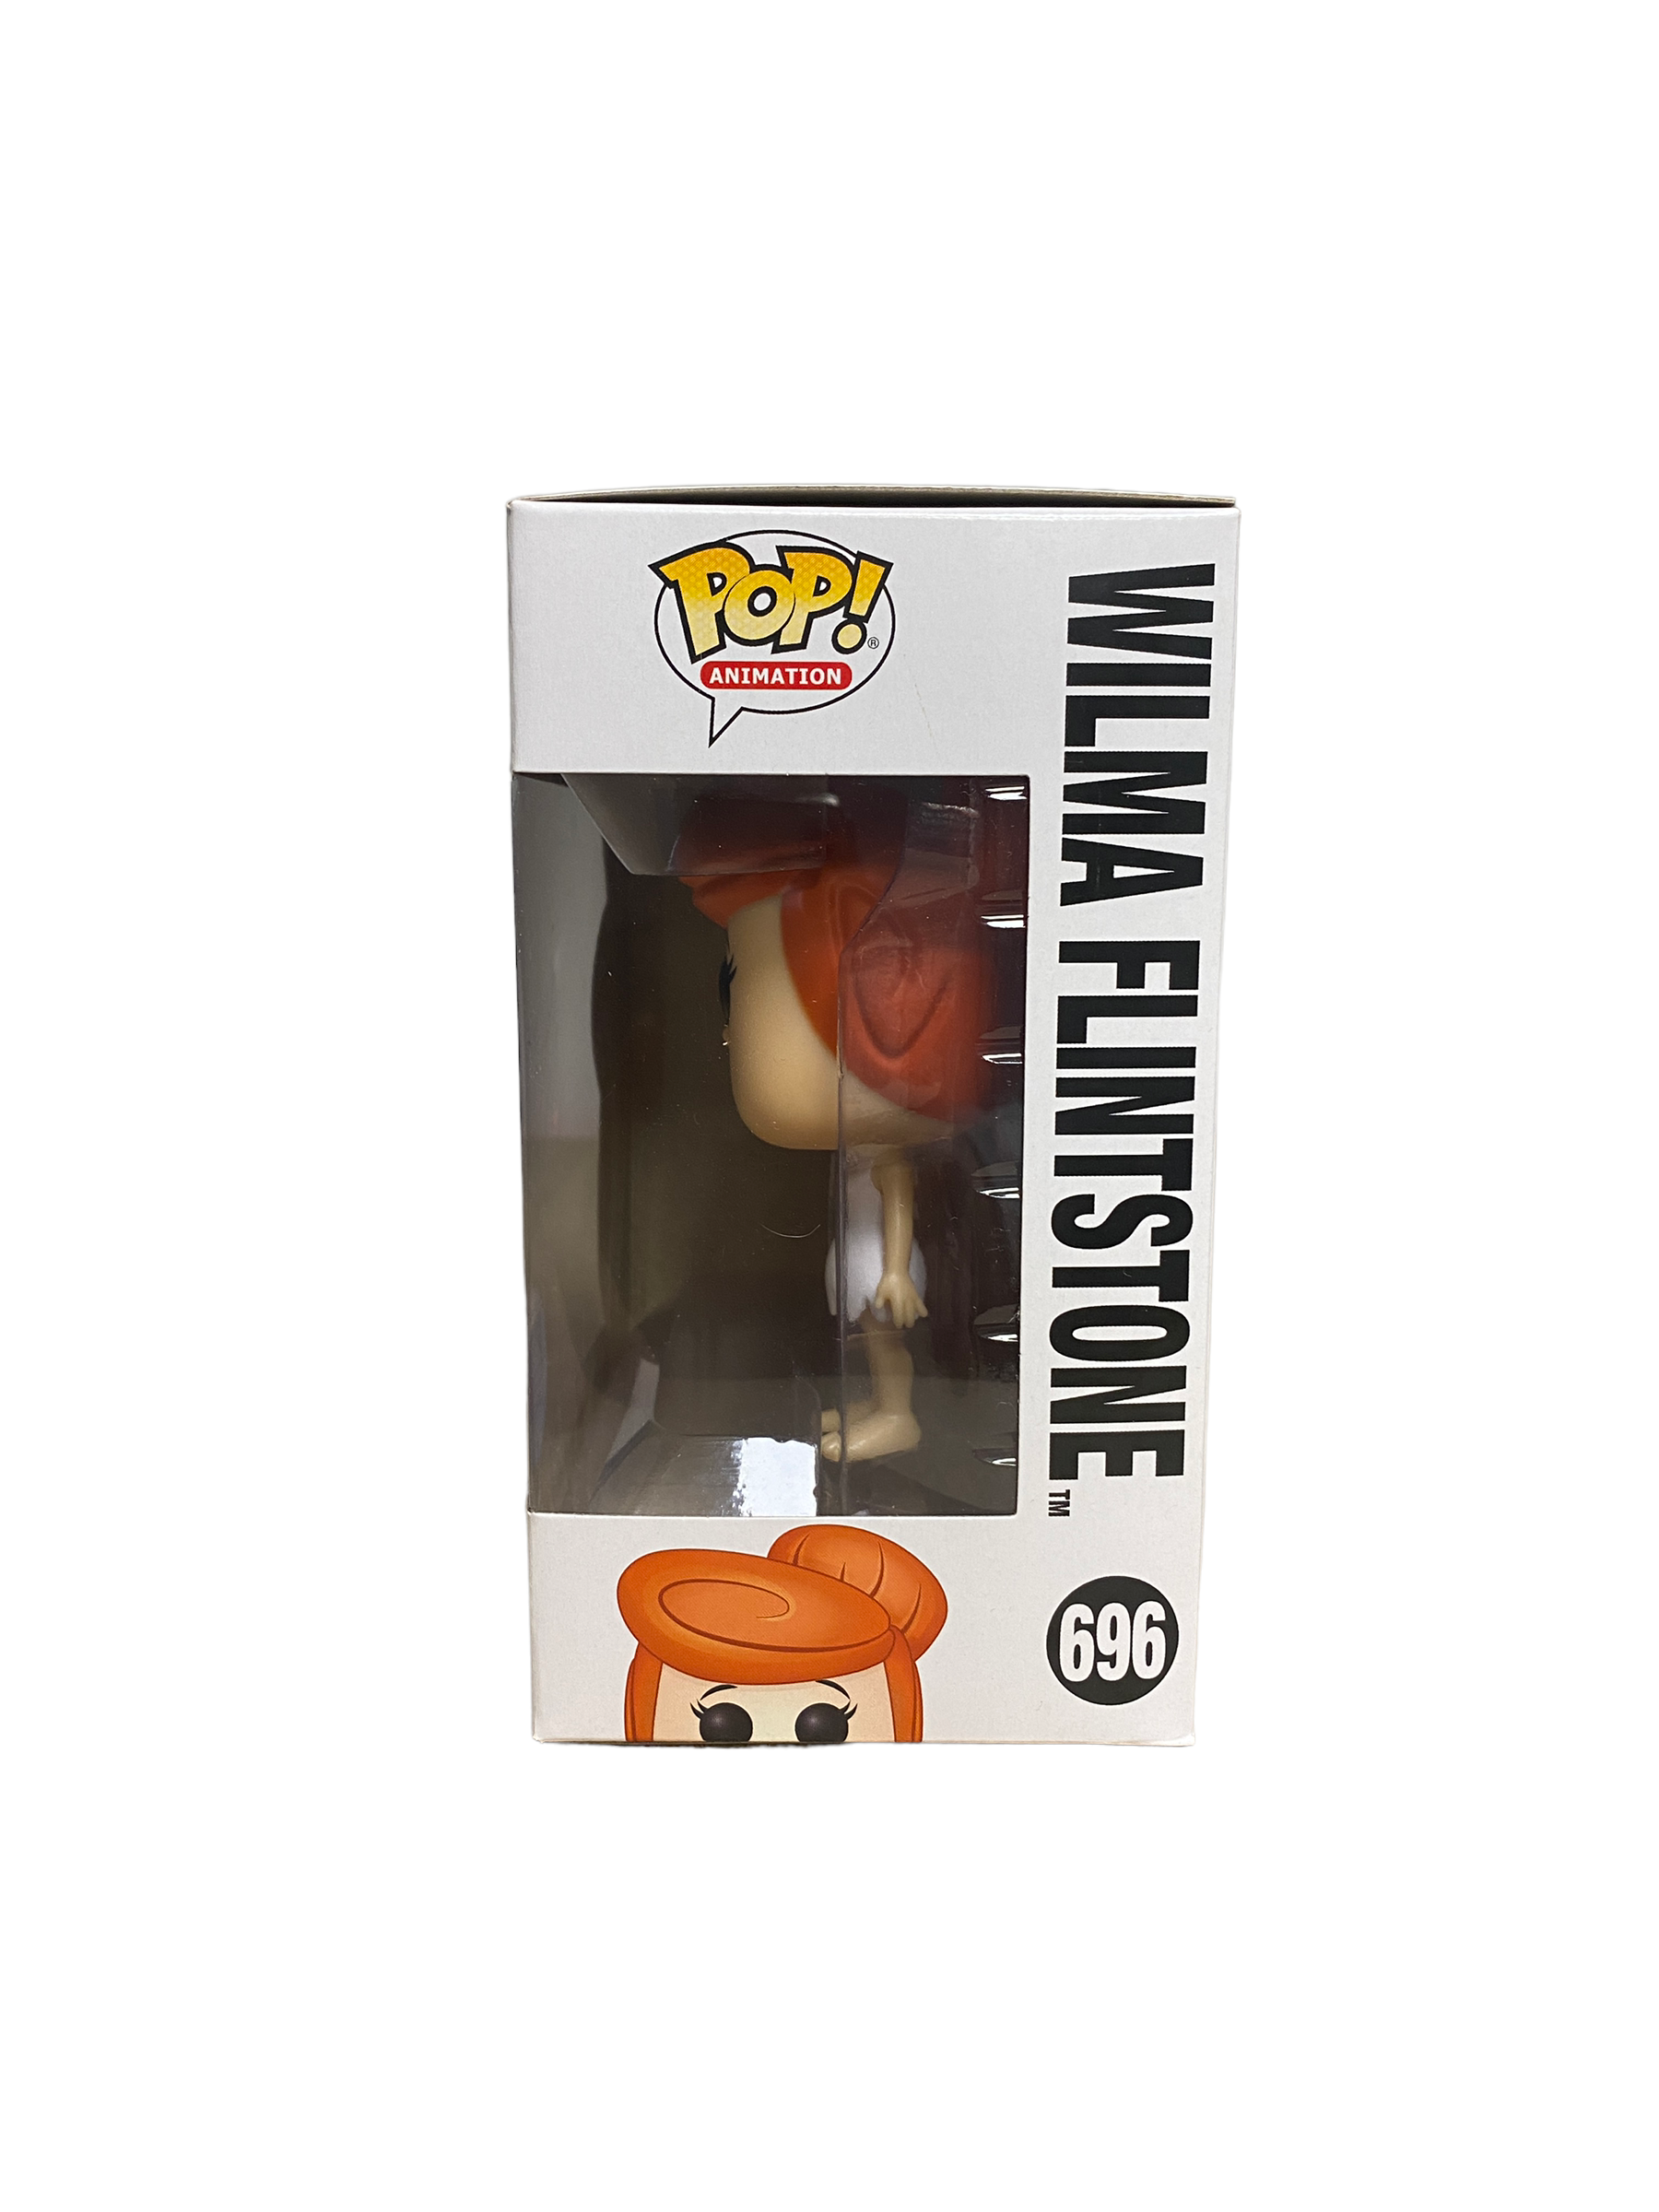 Wilma Flintstone #696 Funko Pop! - The Flintstones - Funko Shop Exclusive -  Condition 7/10